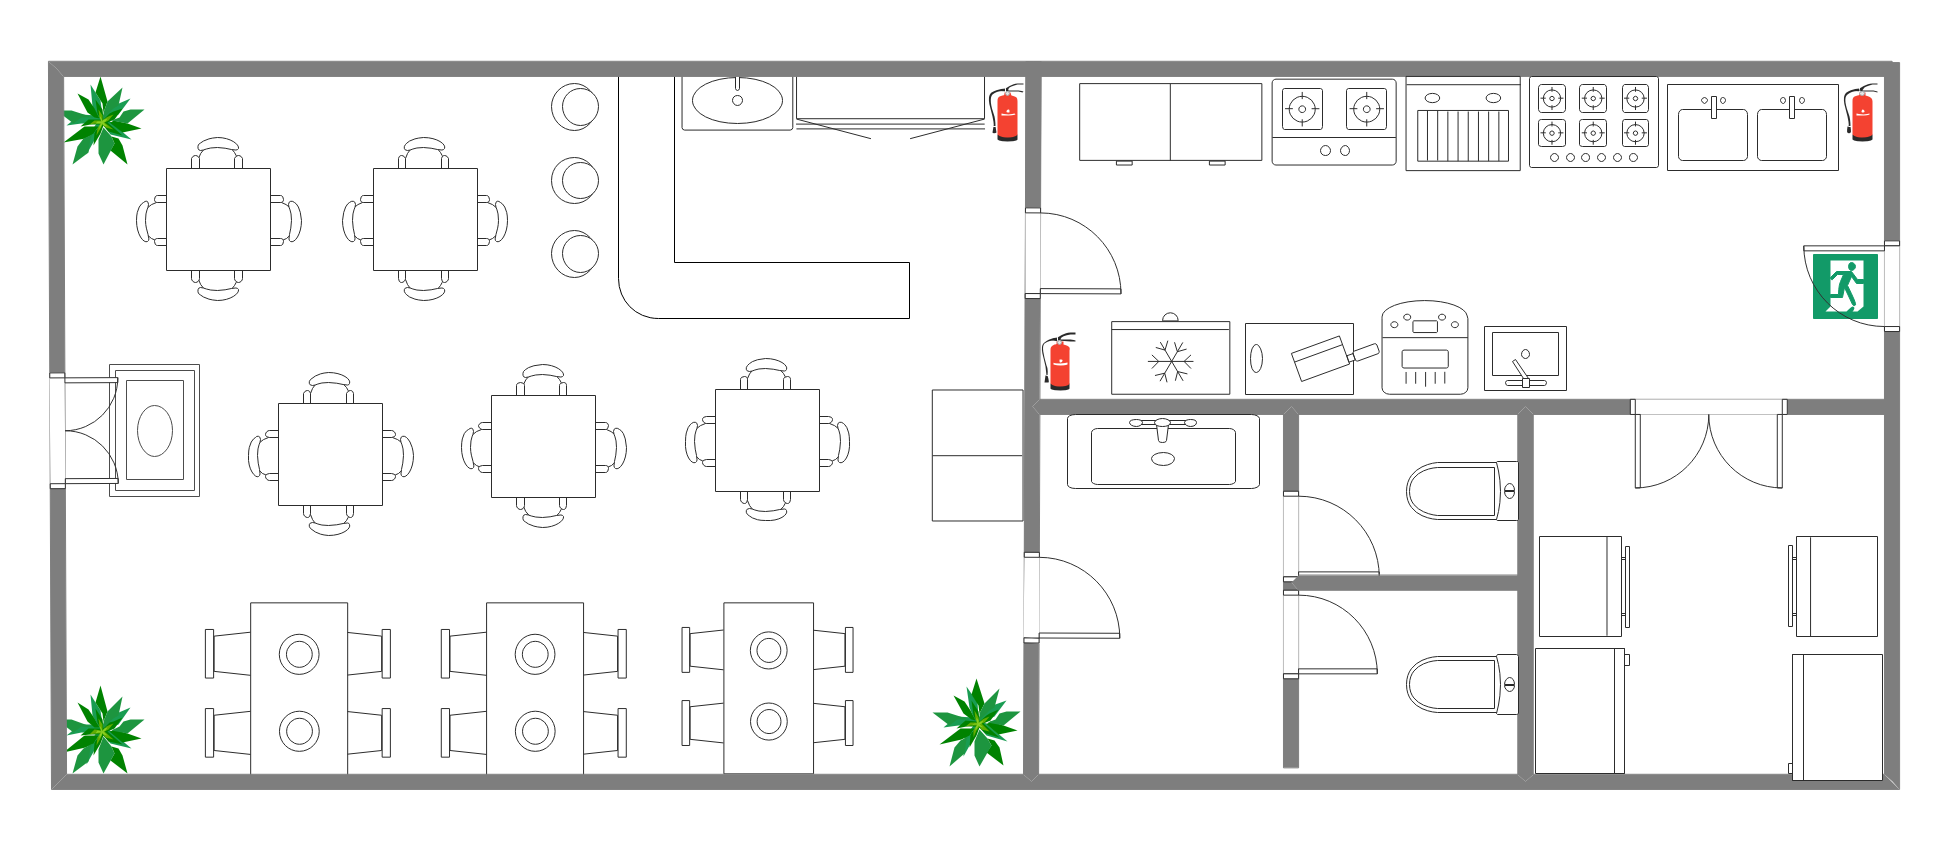 Ramen House Restaurant Floor Plan